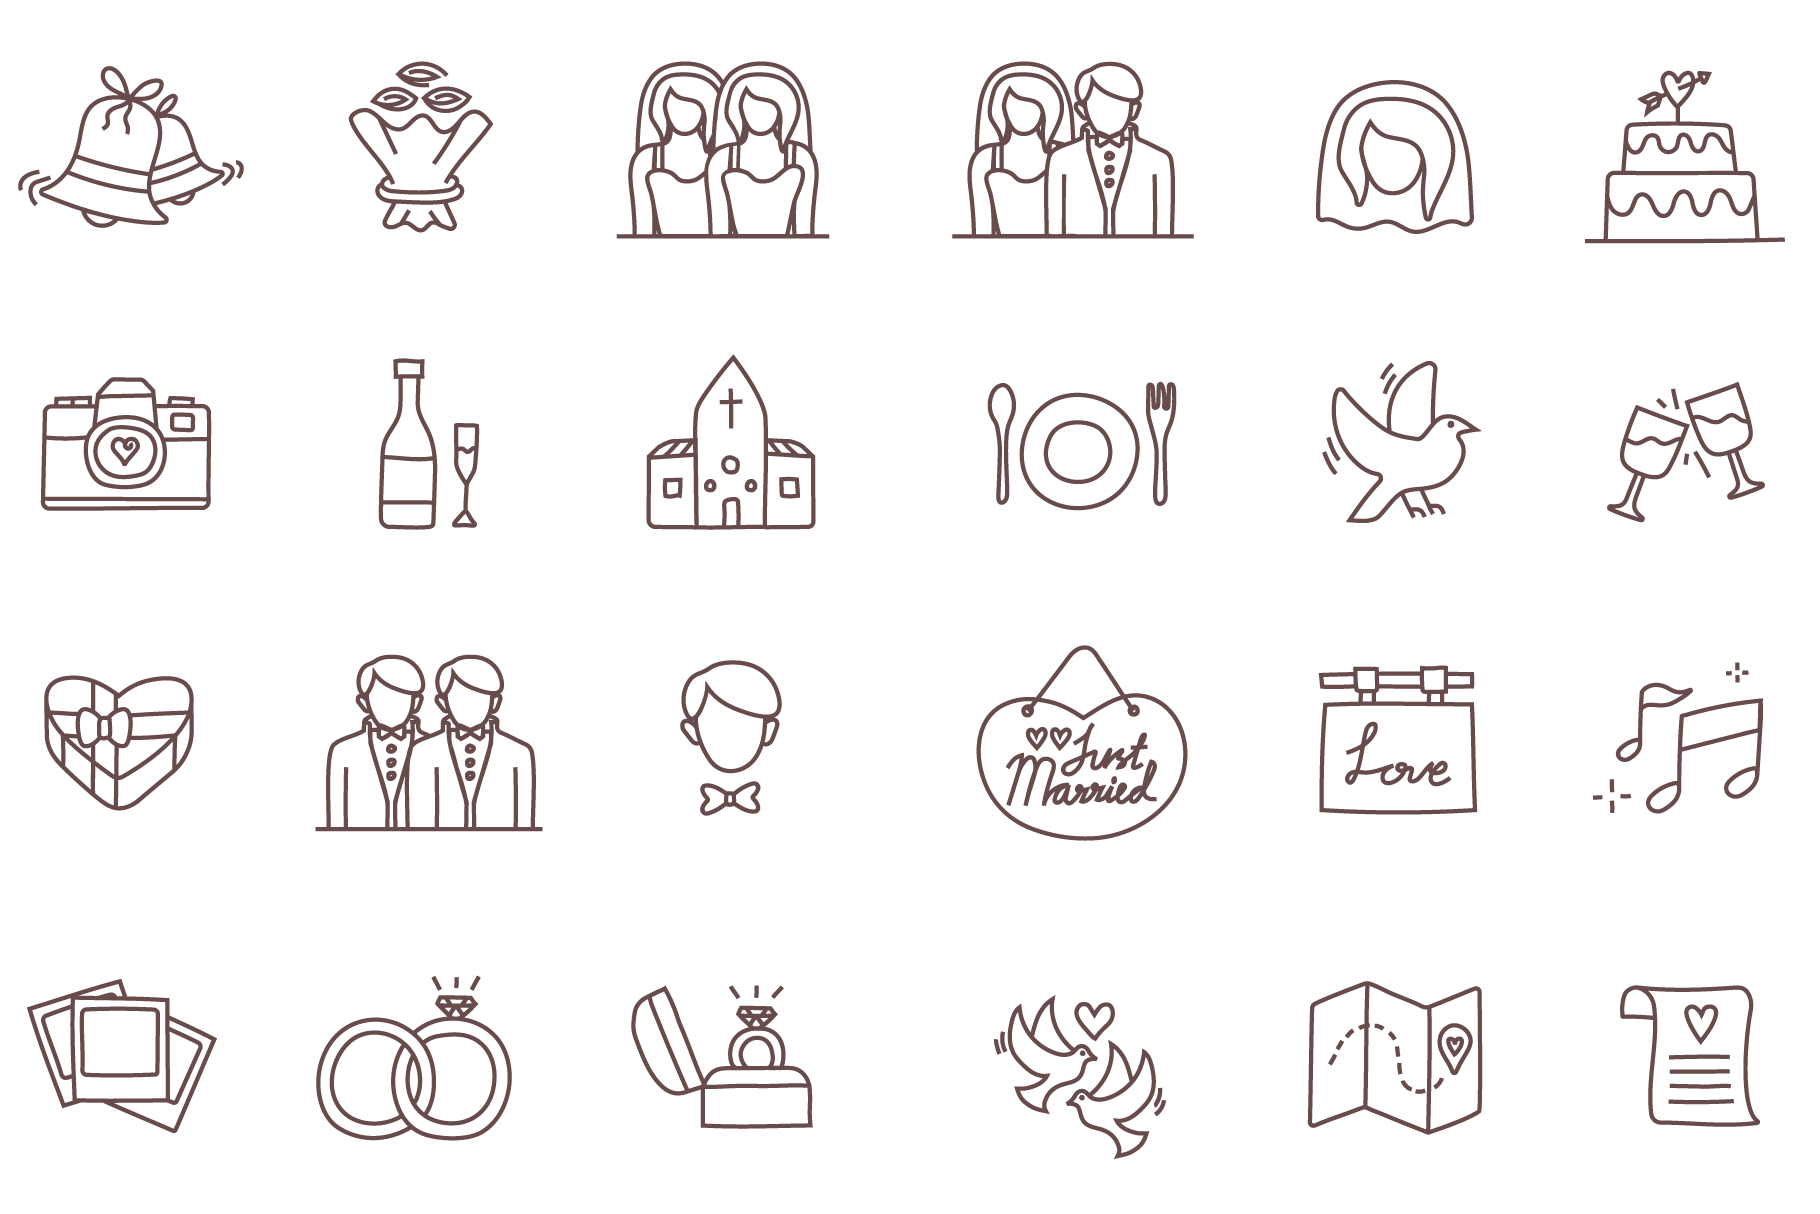 24 Free Wedding Icons by Temploola.